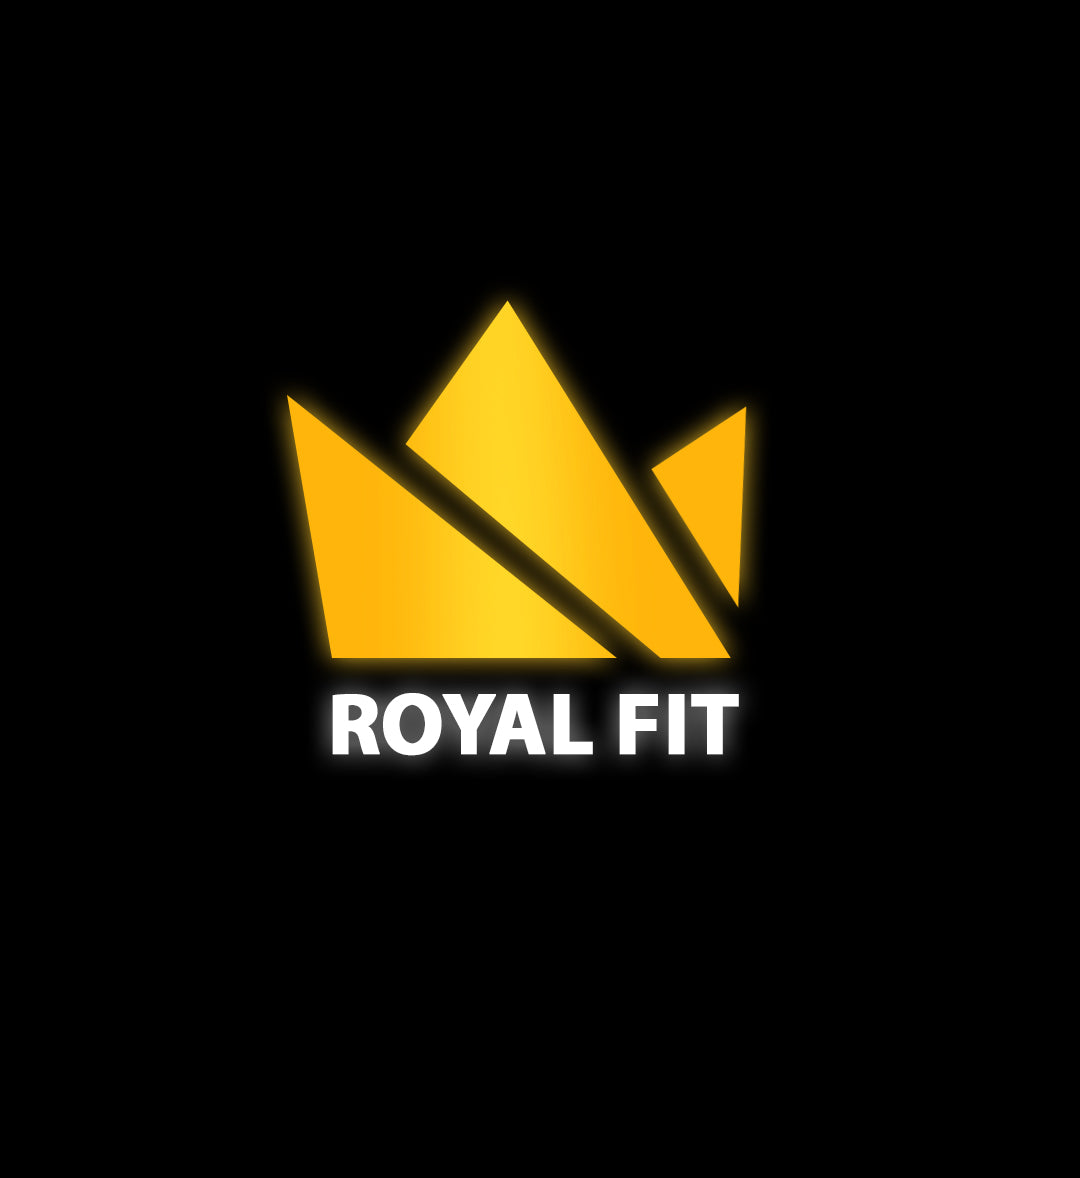 Royal Fit – RoyalFit